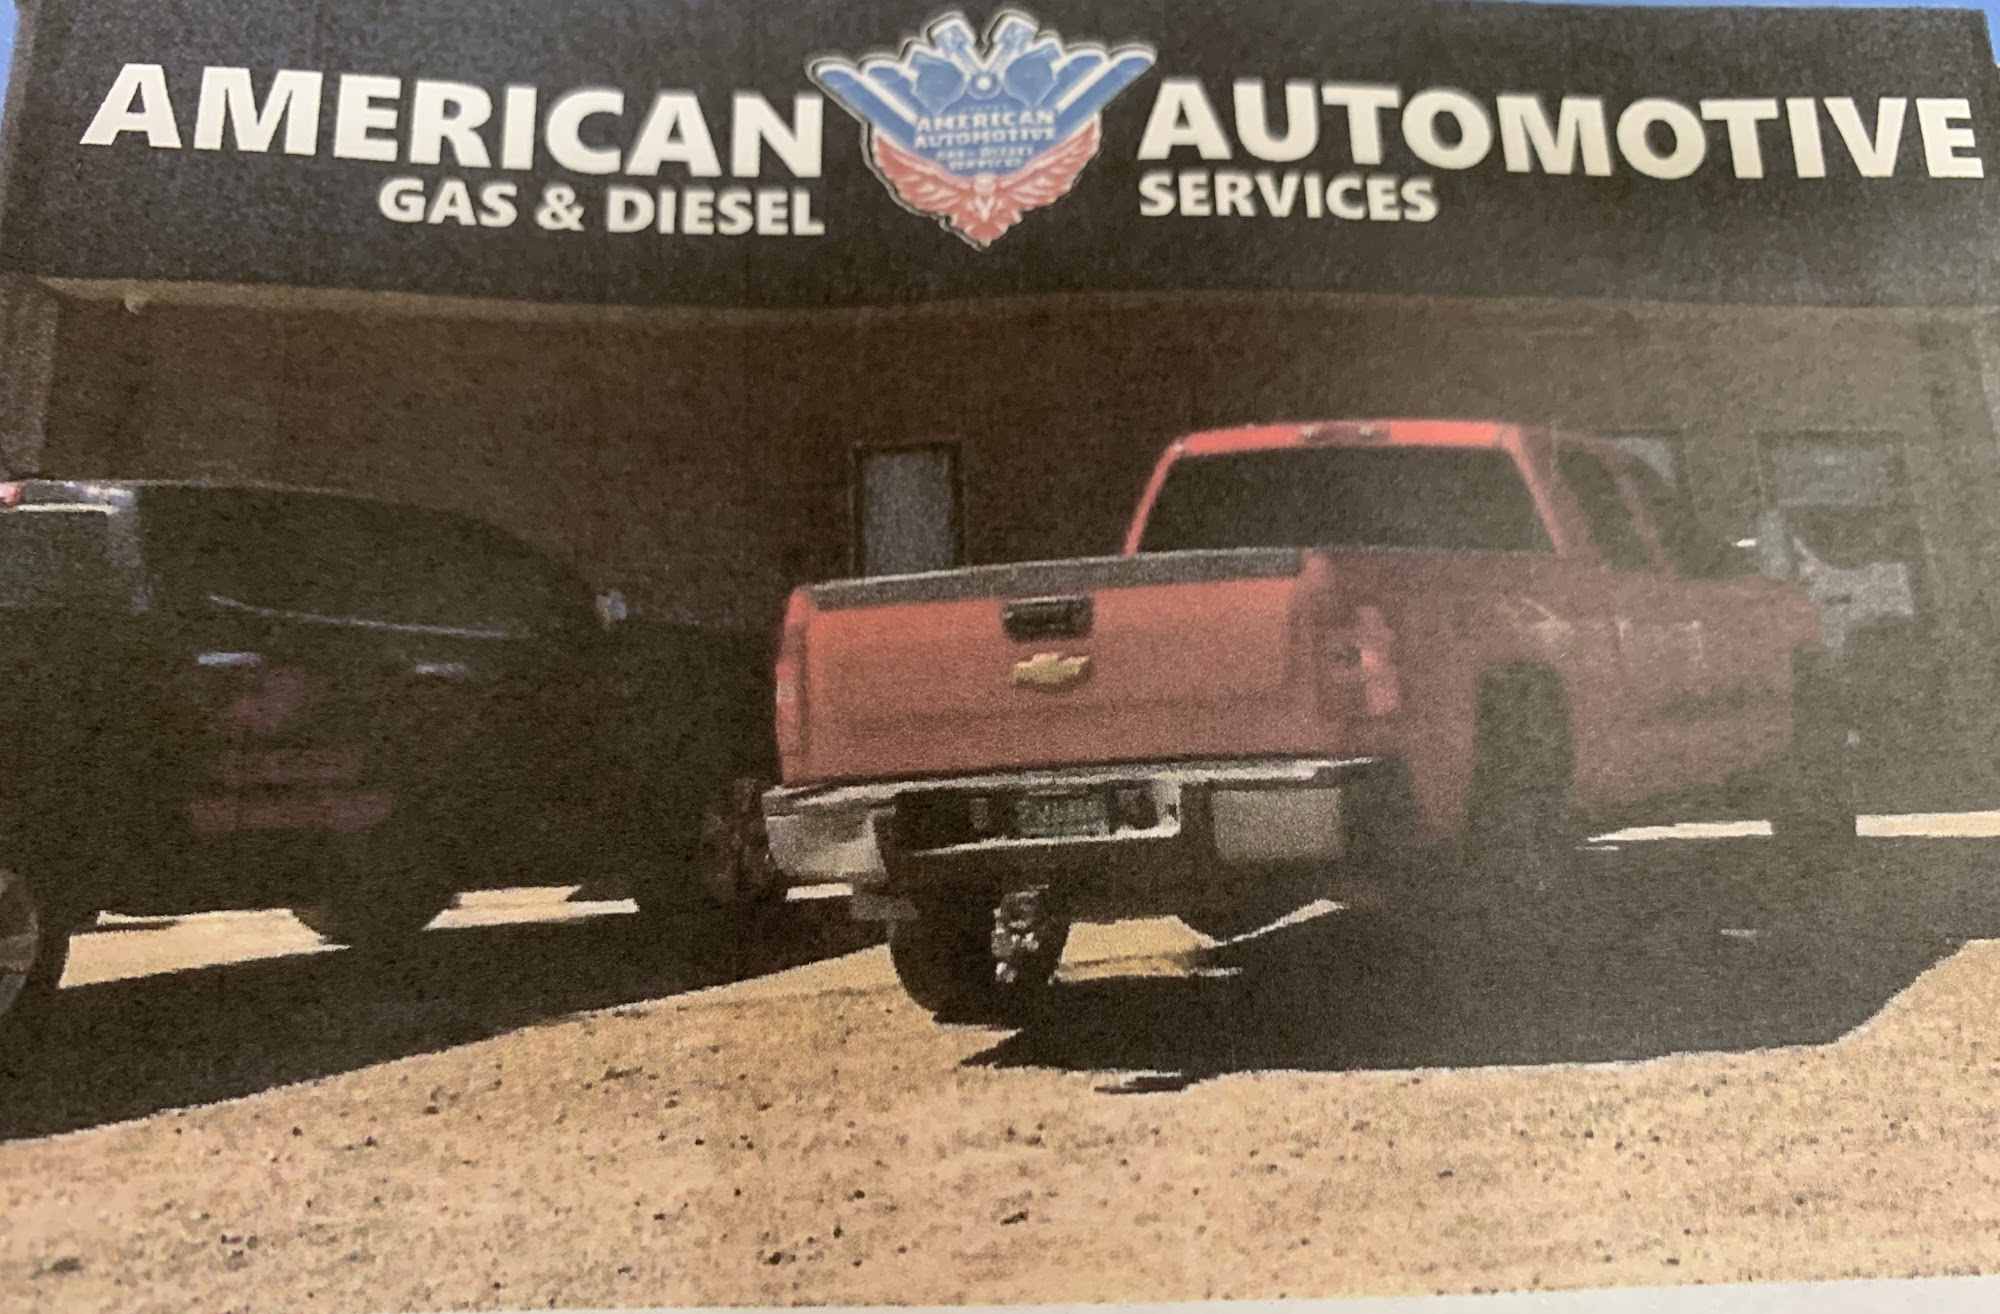 American Automotive Services